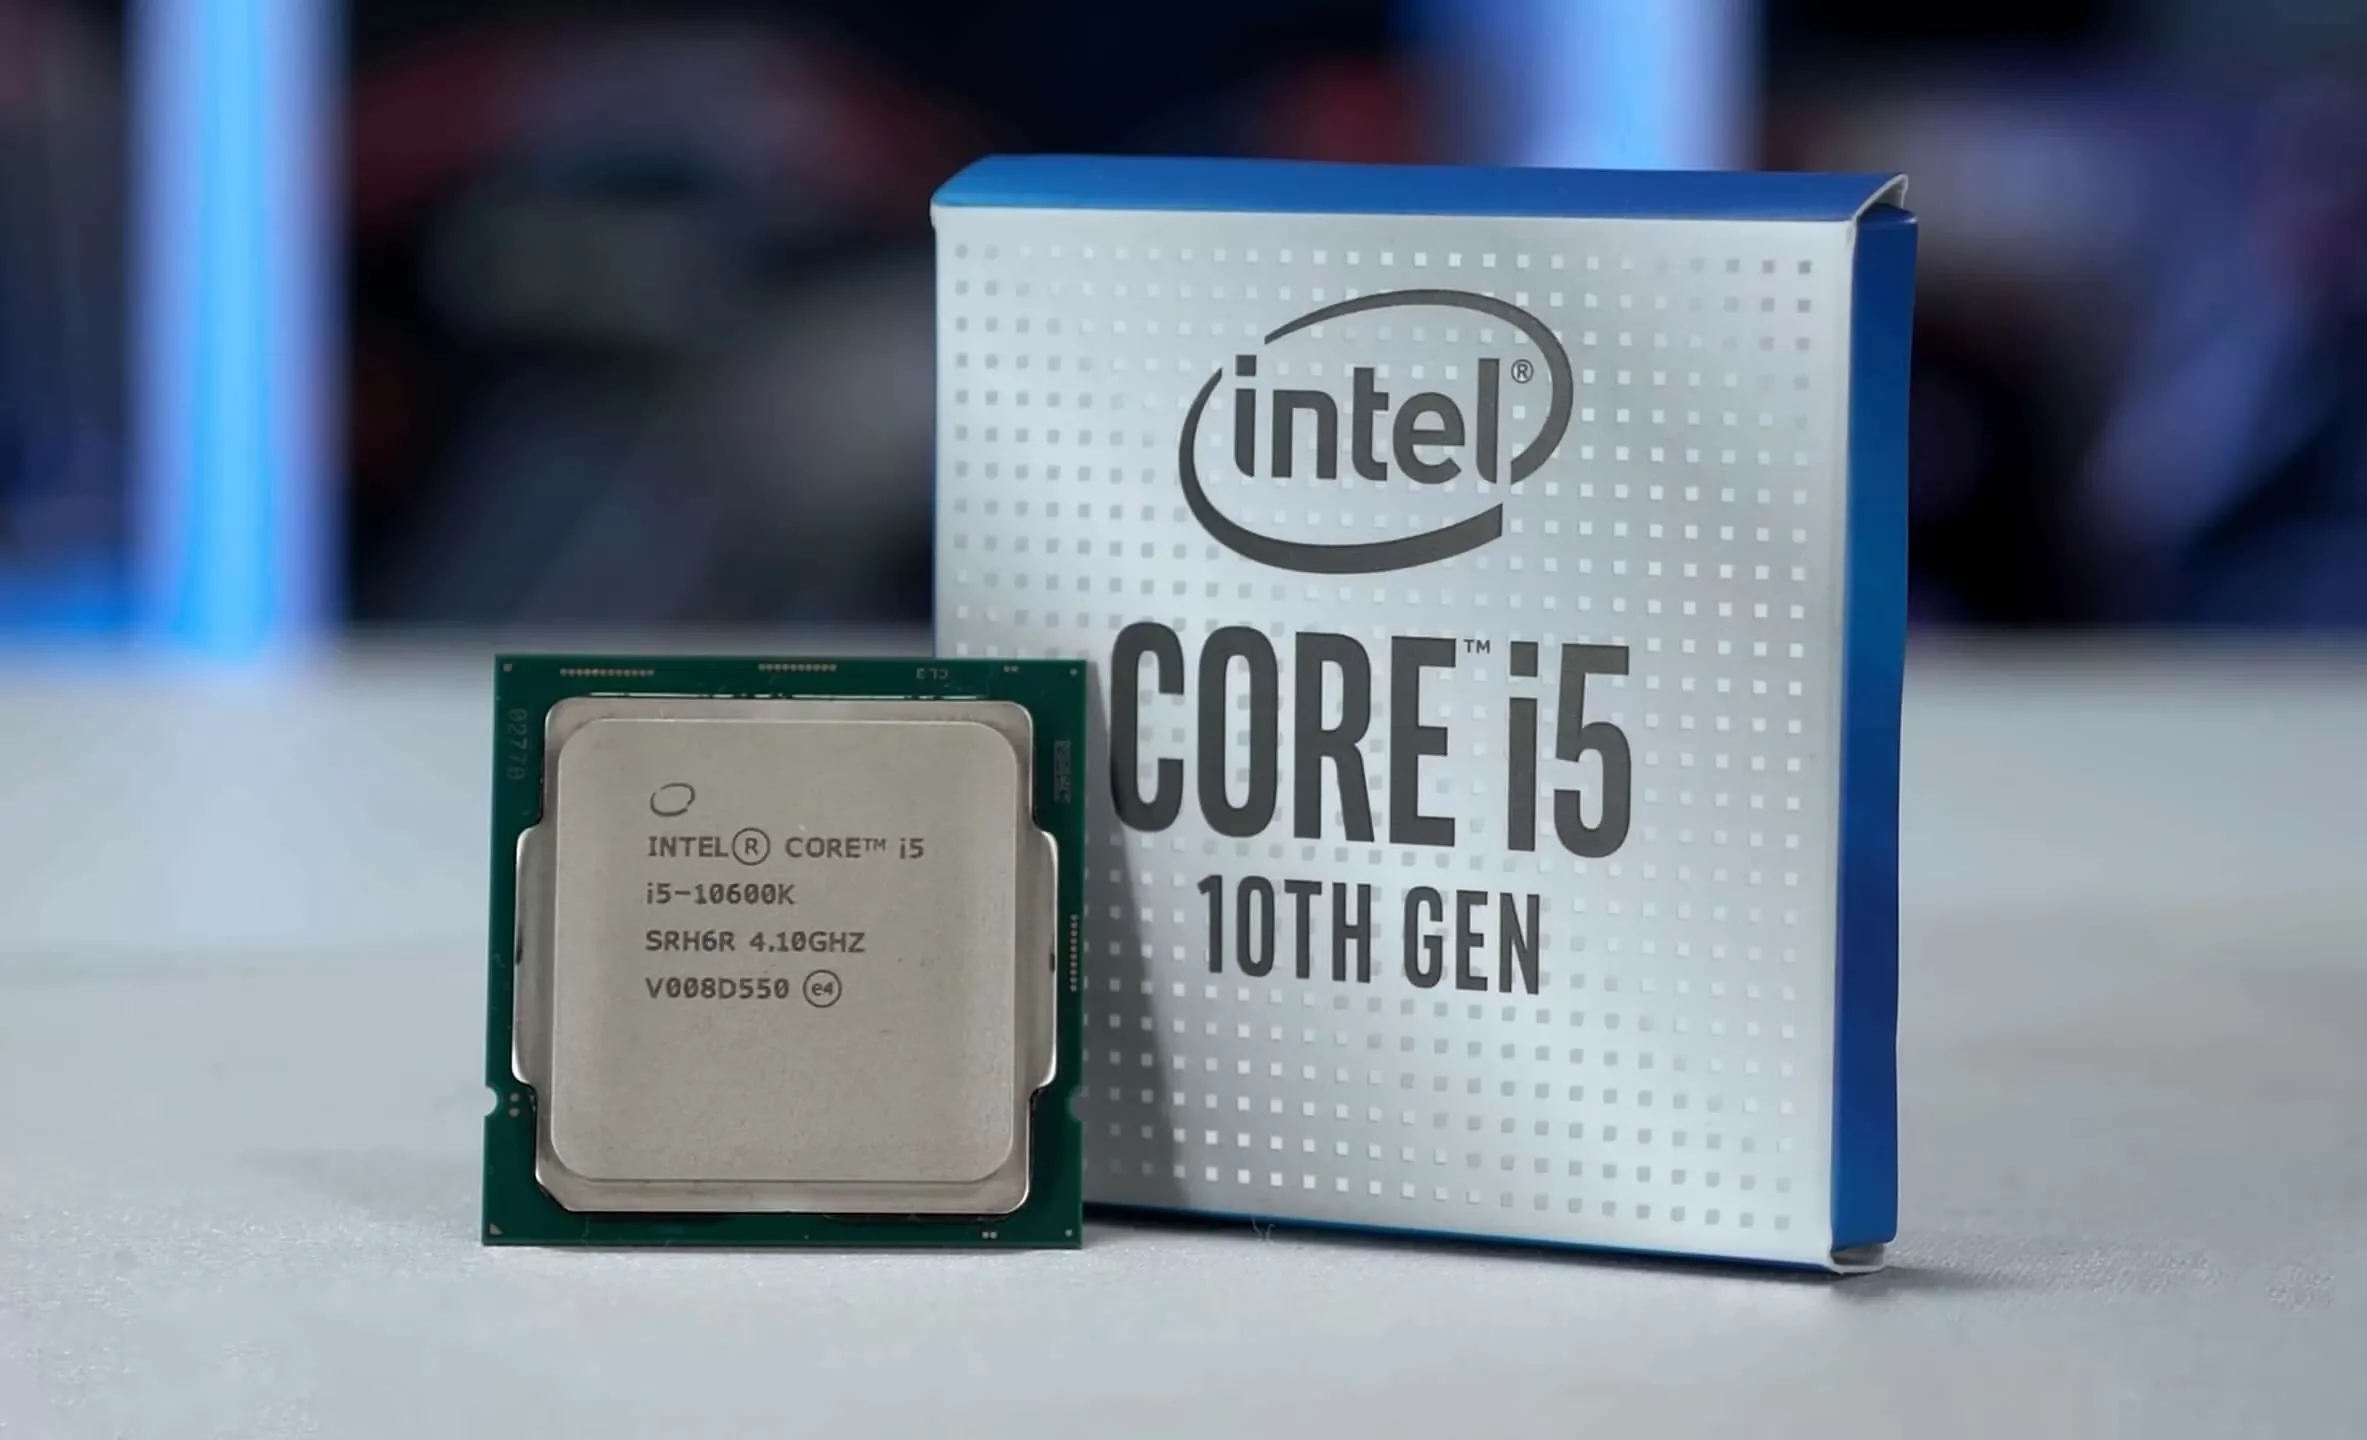 Core first. Intel i5 10600k. Core i5 10600k. Intel Core i5-10600k Box. Процессор Intel Core i5-10400f.